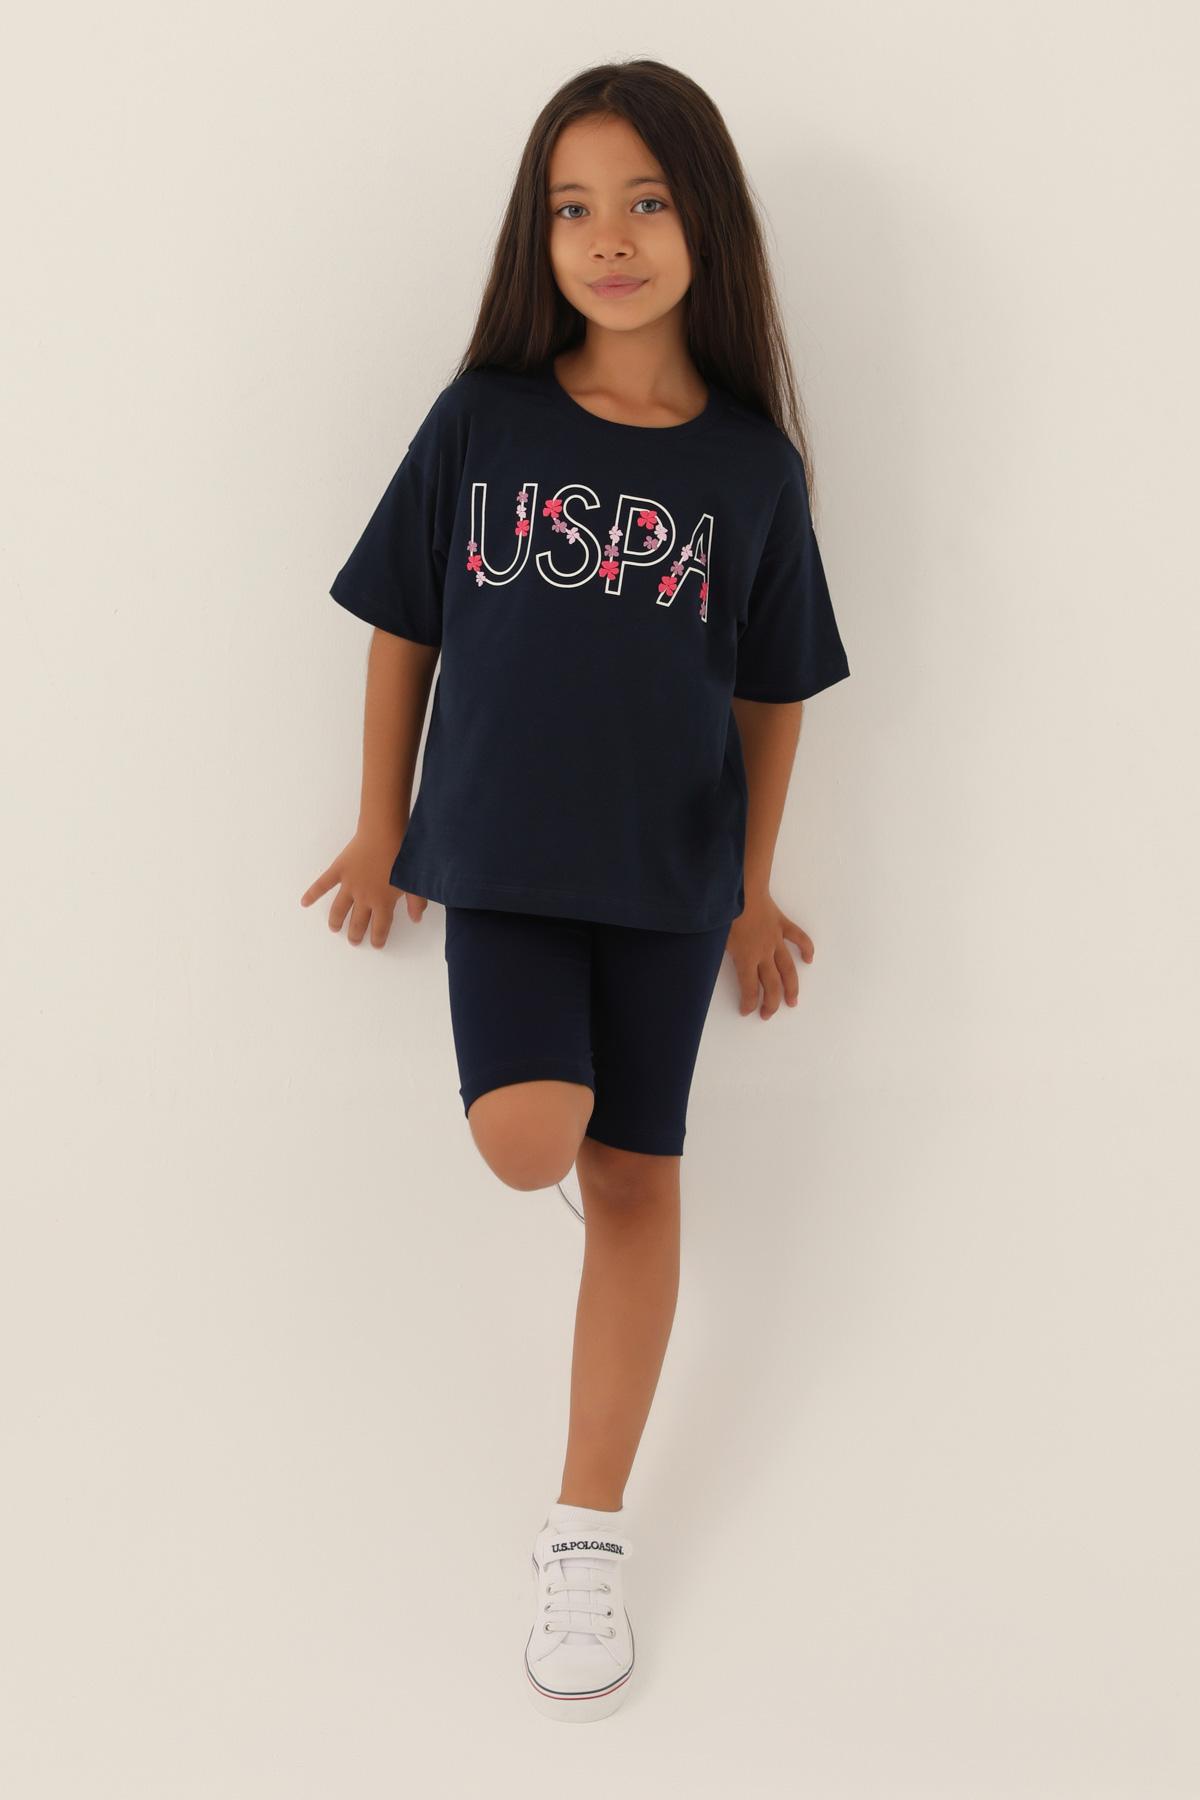 Selected image for U.S. Polo Assn. Komplet za devojčice US1846-G, Teget